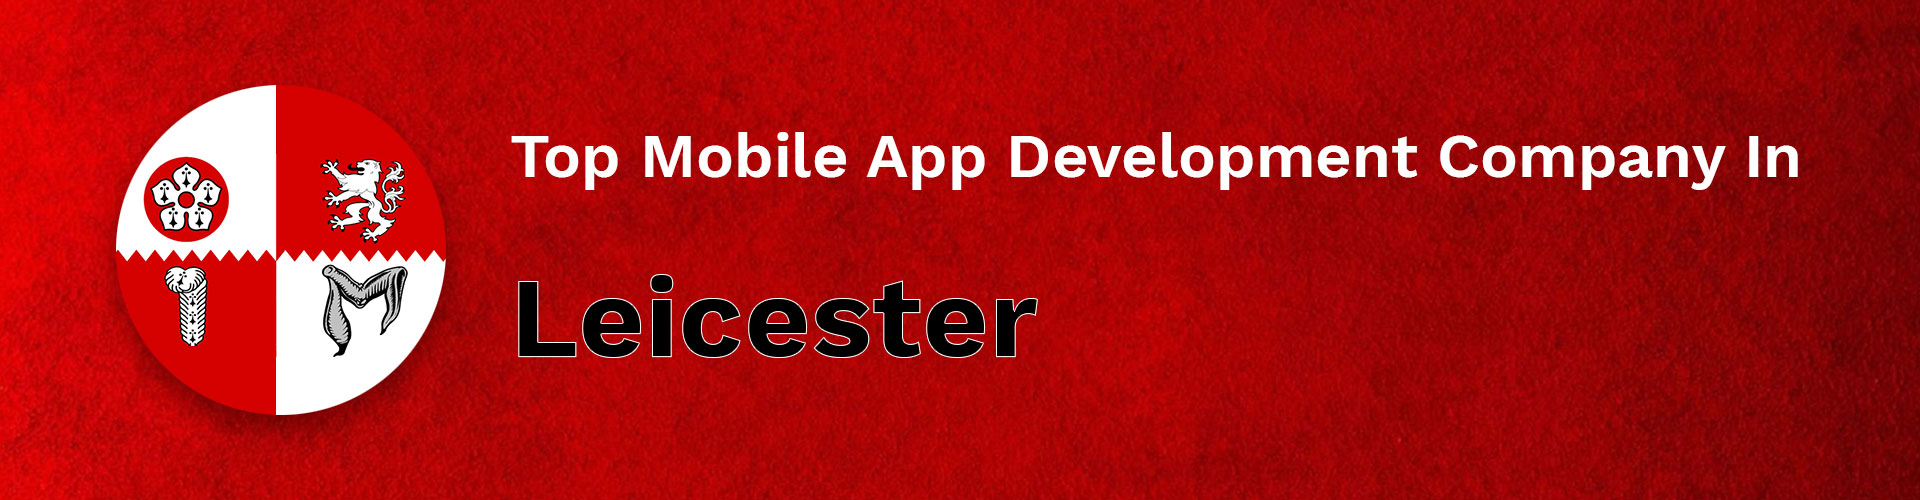 mobile app development company leicester